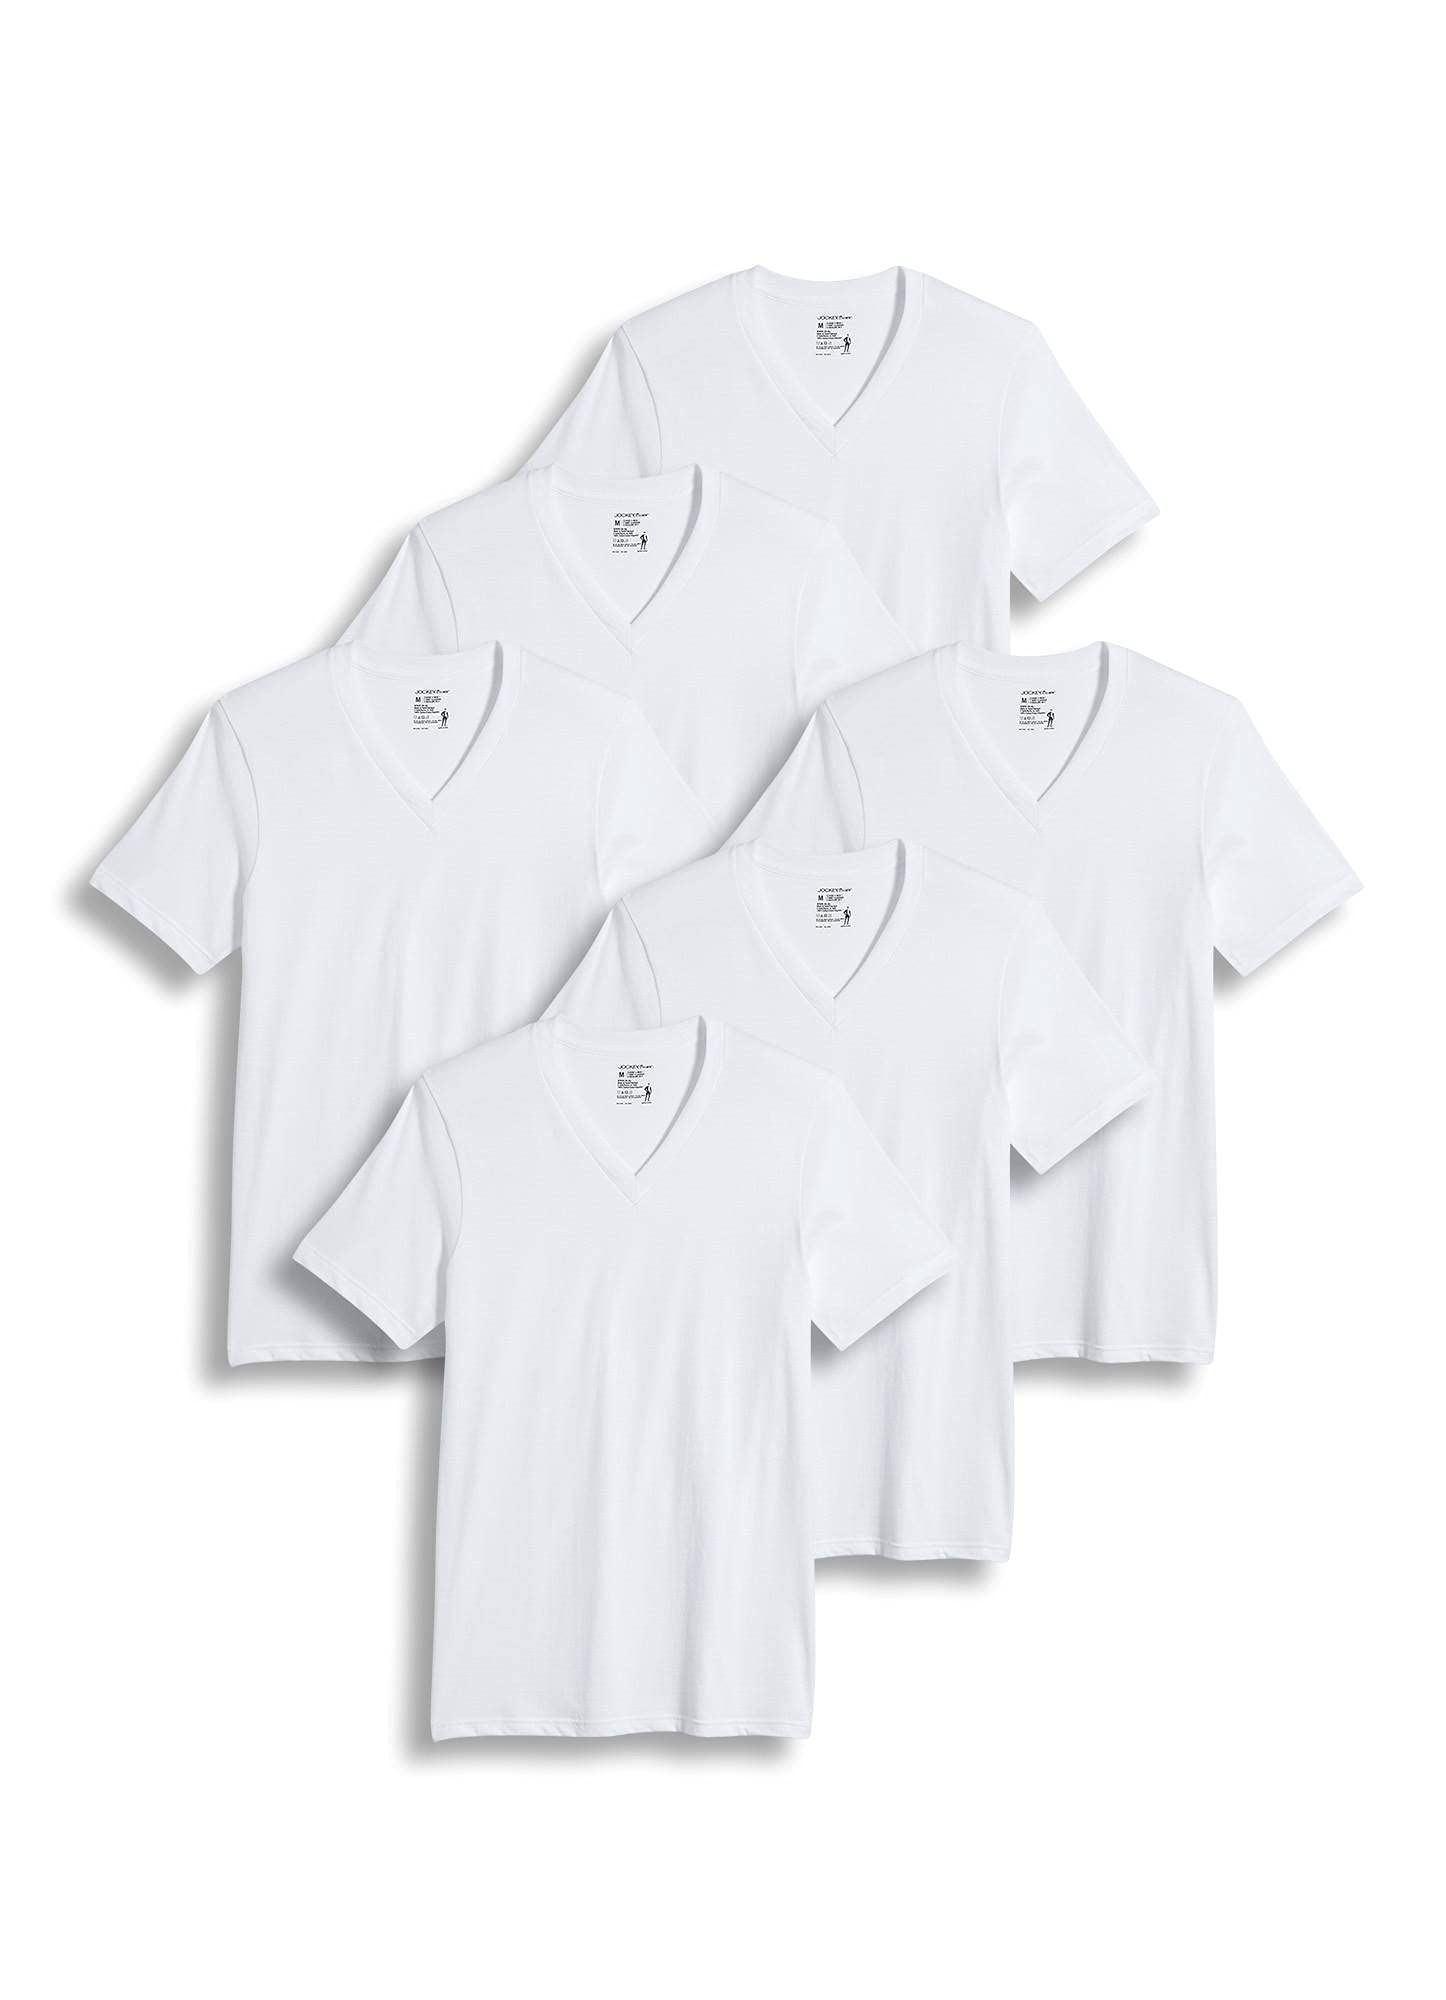 Jockey V-Neck T-Shirt 6-Pack, $32.15